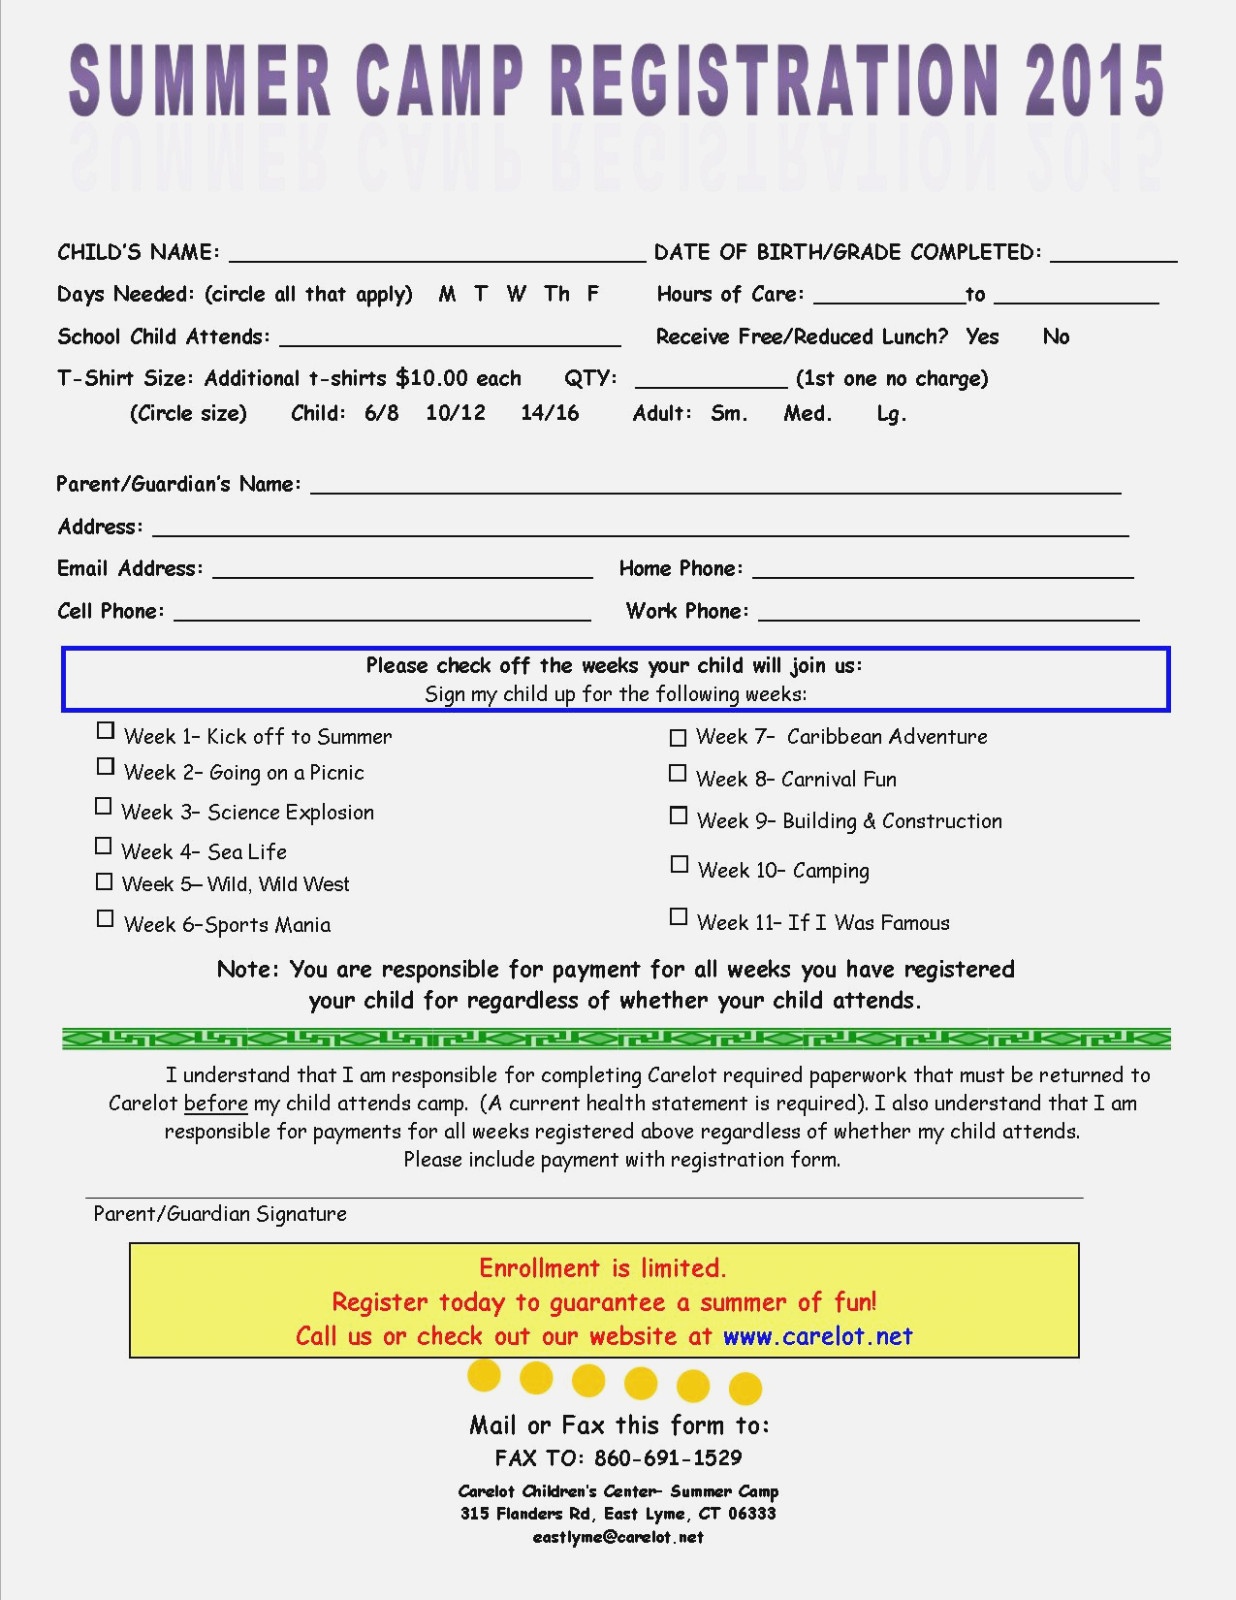 Summer Camp Registration Form Template Word